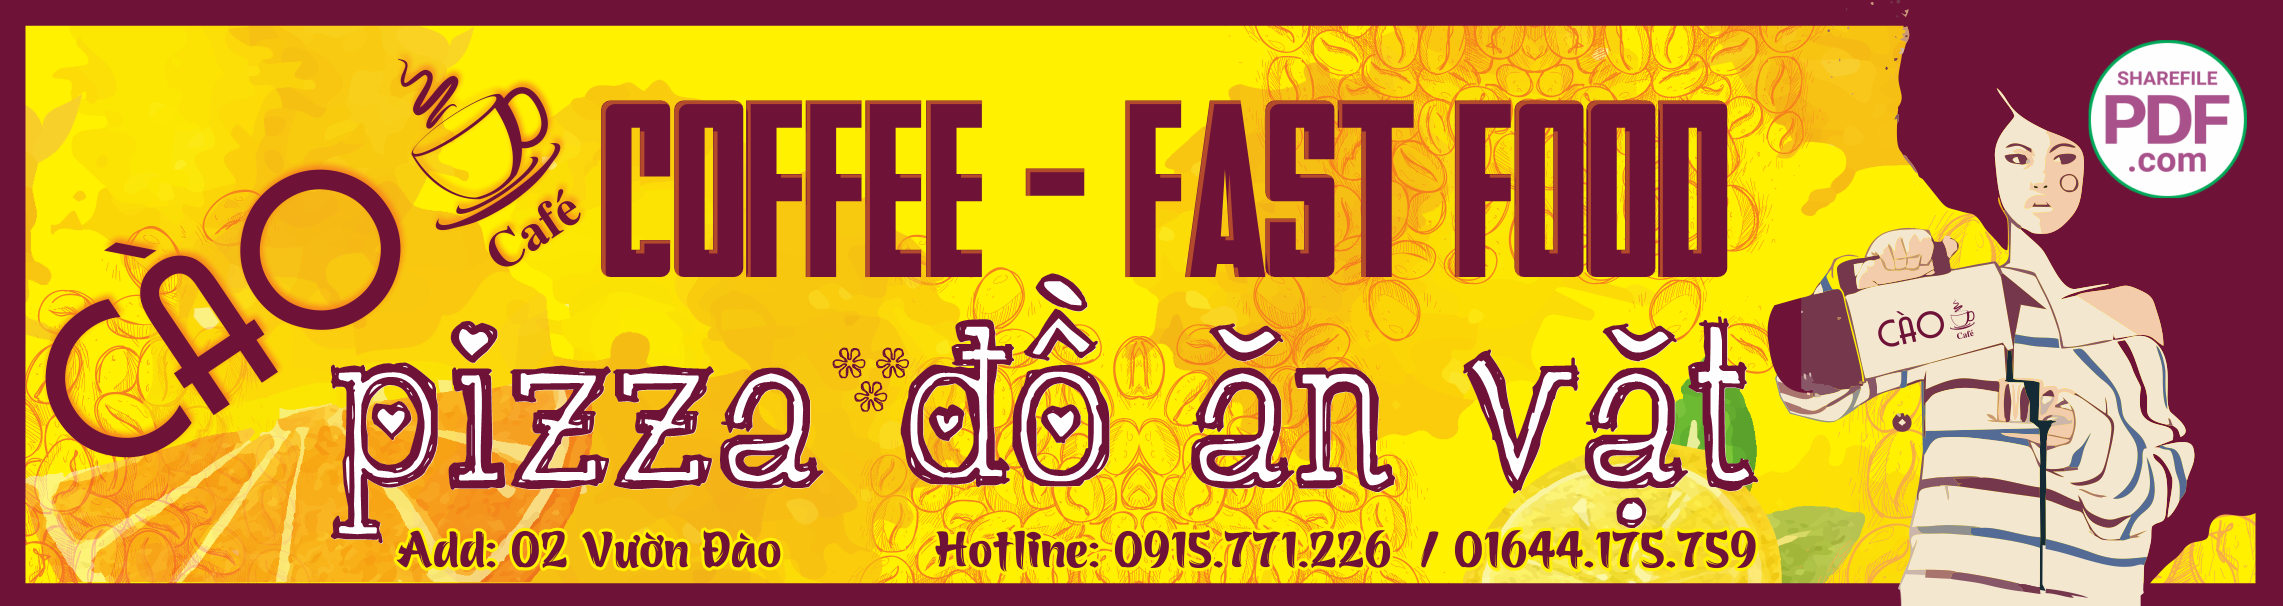 coffee fast food - cao ca phe.png